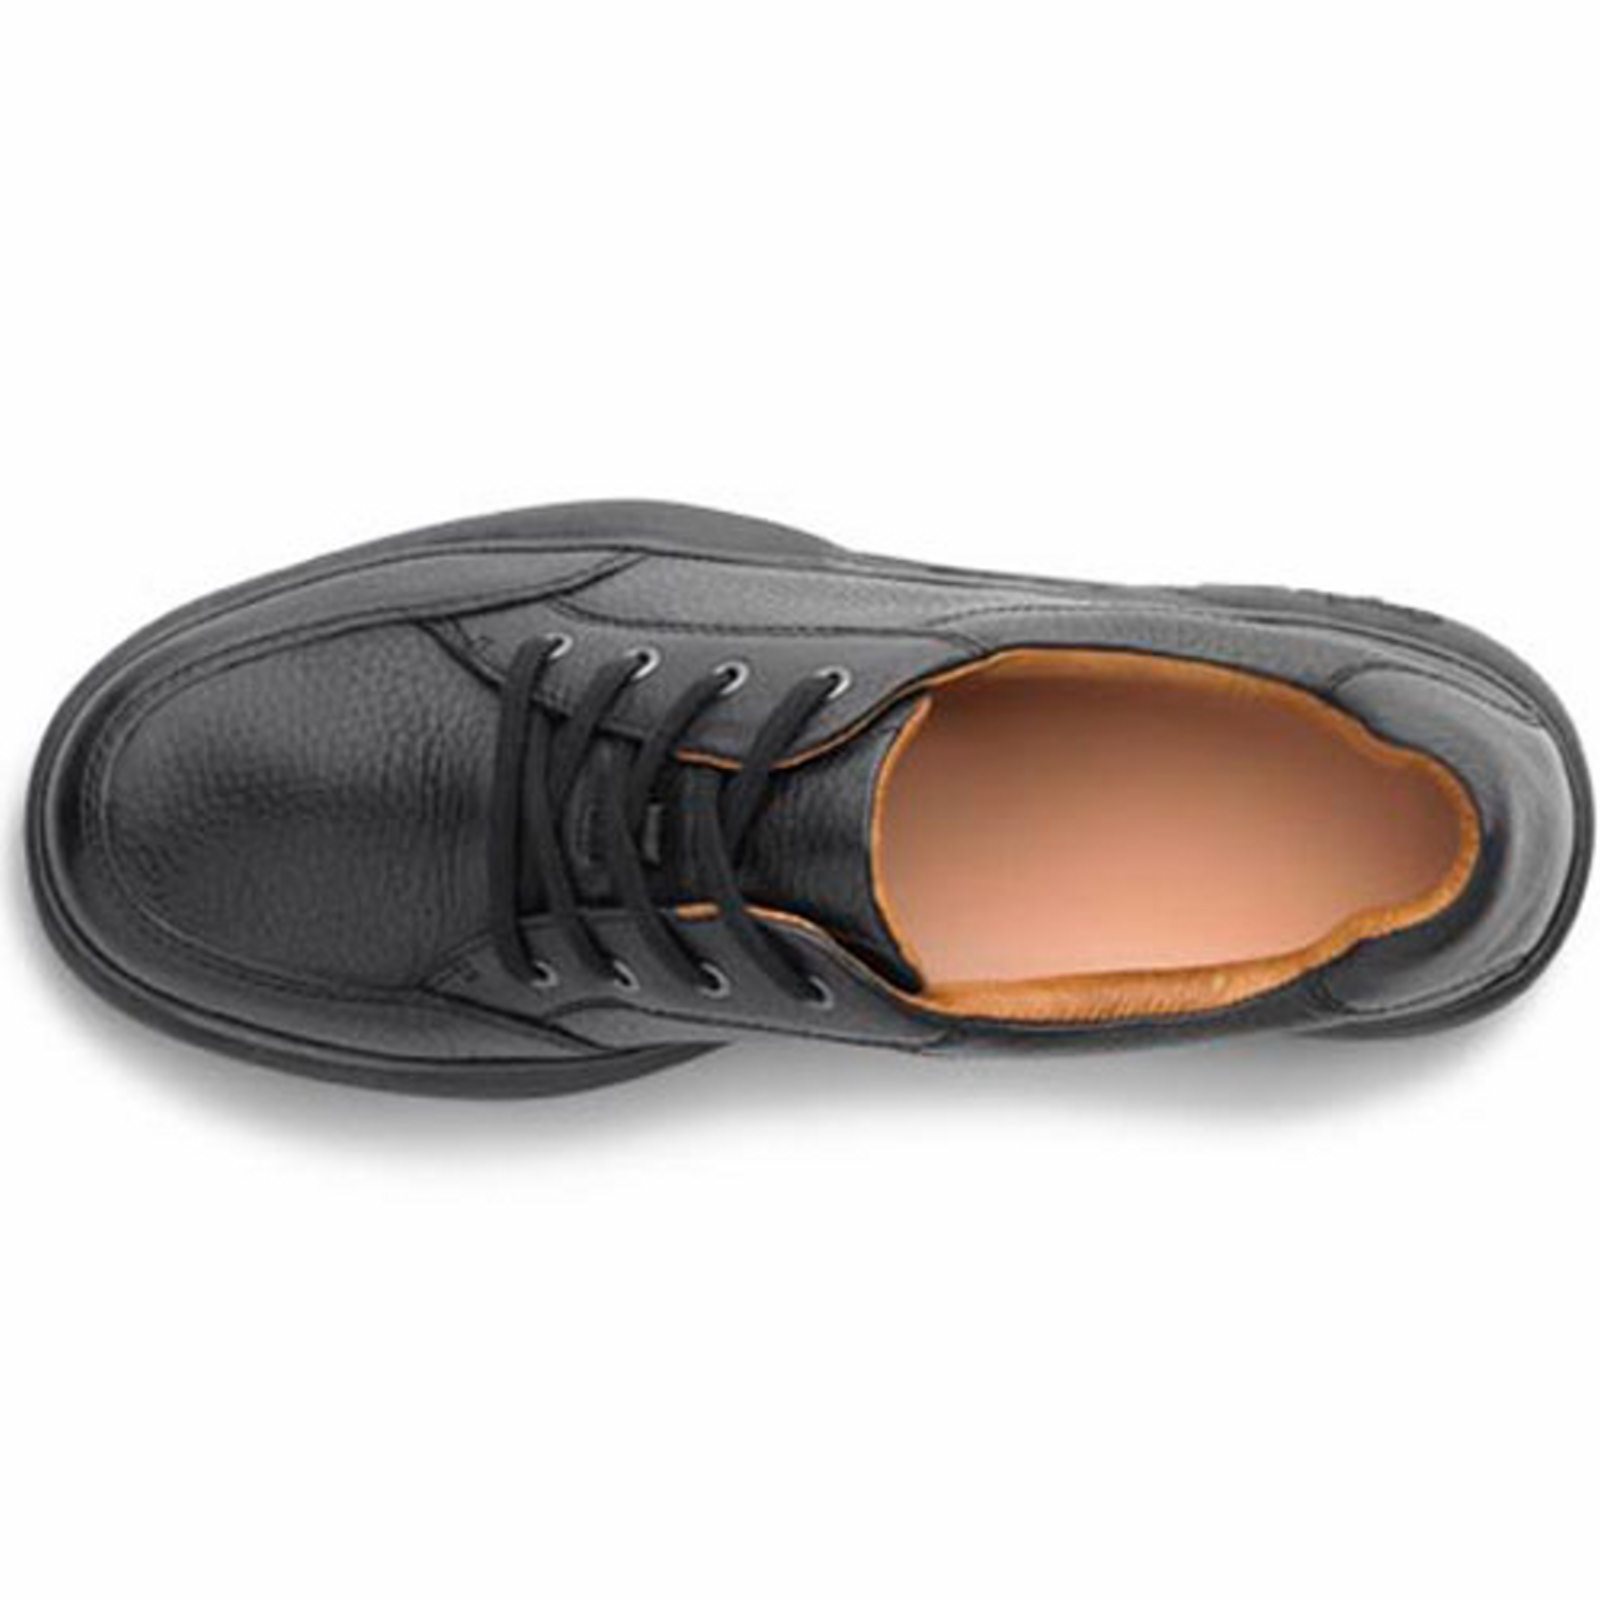 Dr. Comfort Justin Men's Casual Shoe: 11 Medium (B/D) Chestnut Suede Lace - image 4 of 4